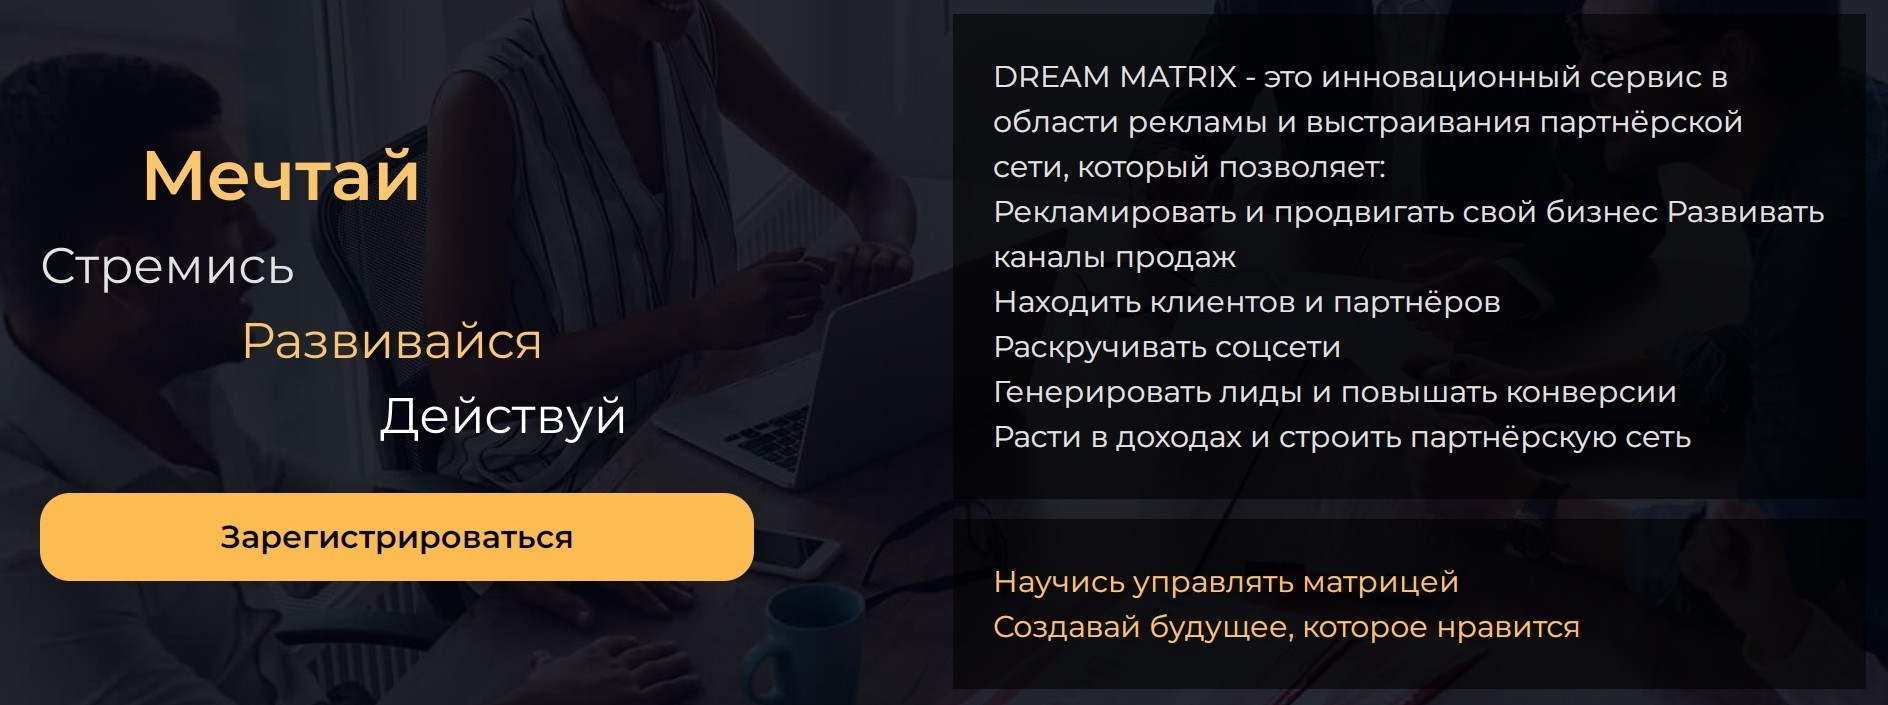 Dreammatrix.site проект обзор